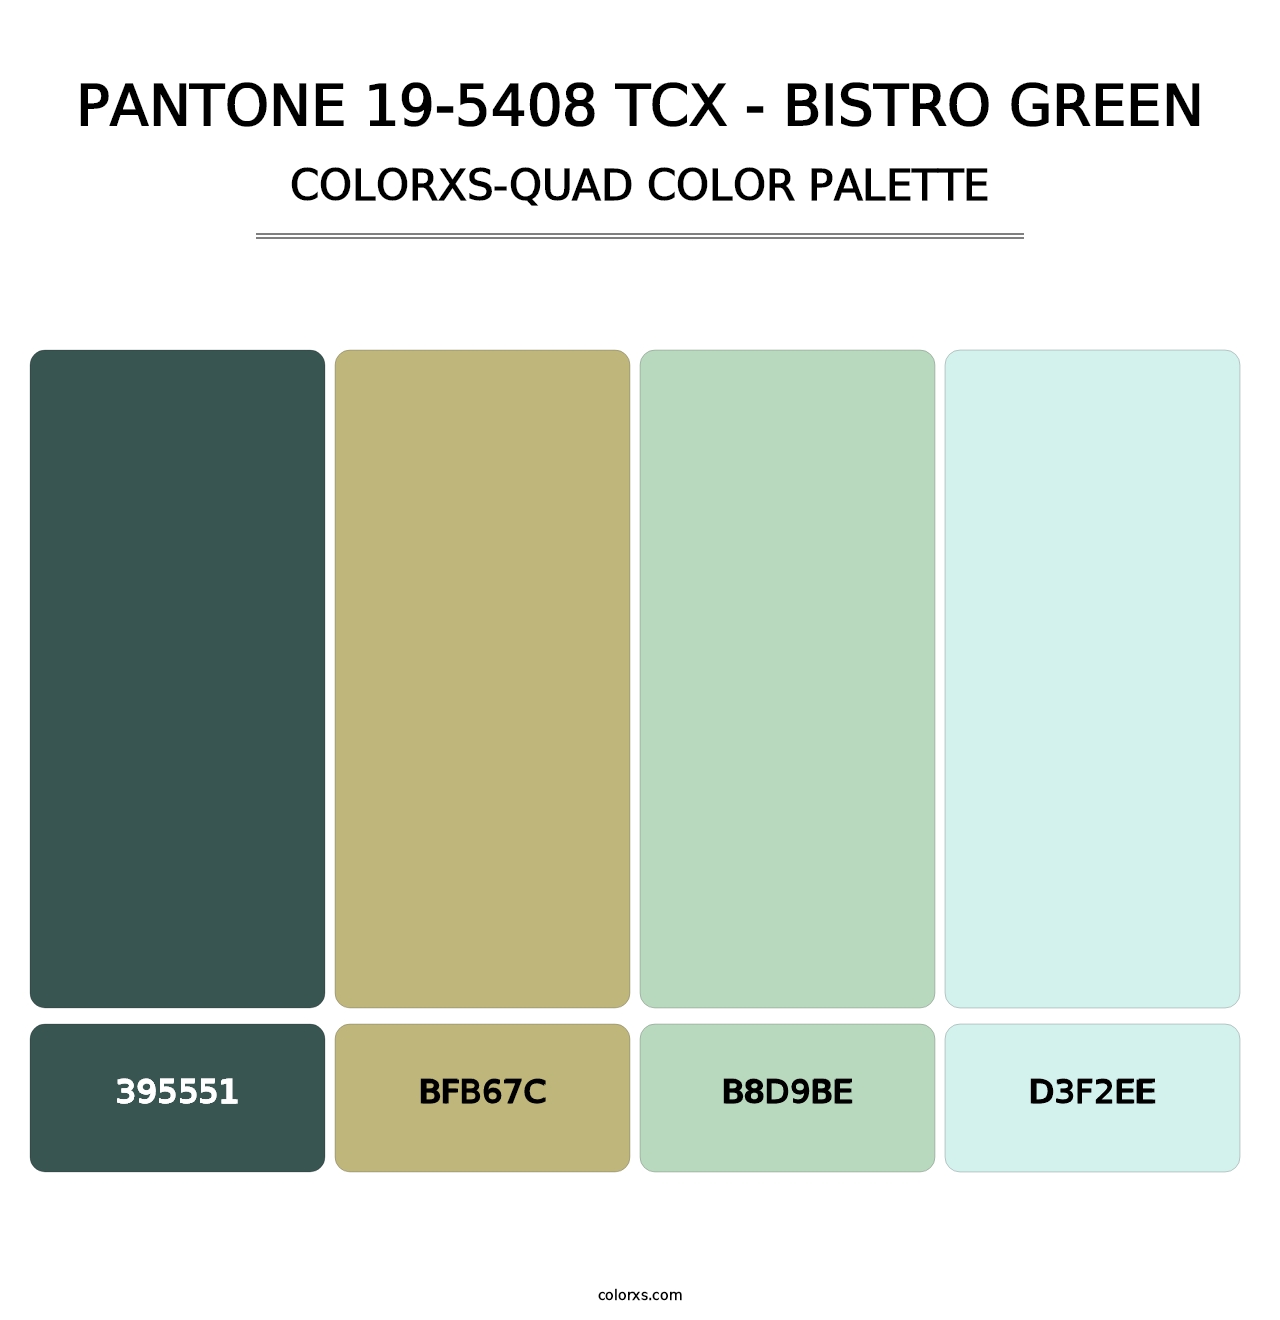 PANTONE 19-5408 TCX - Bistro Green - Colorxs Quad Palette